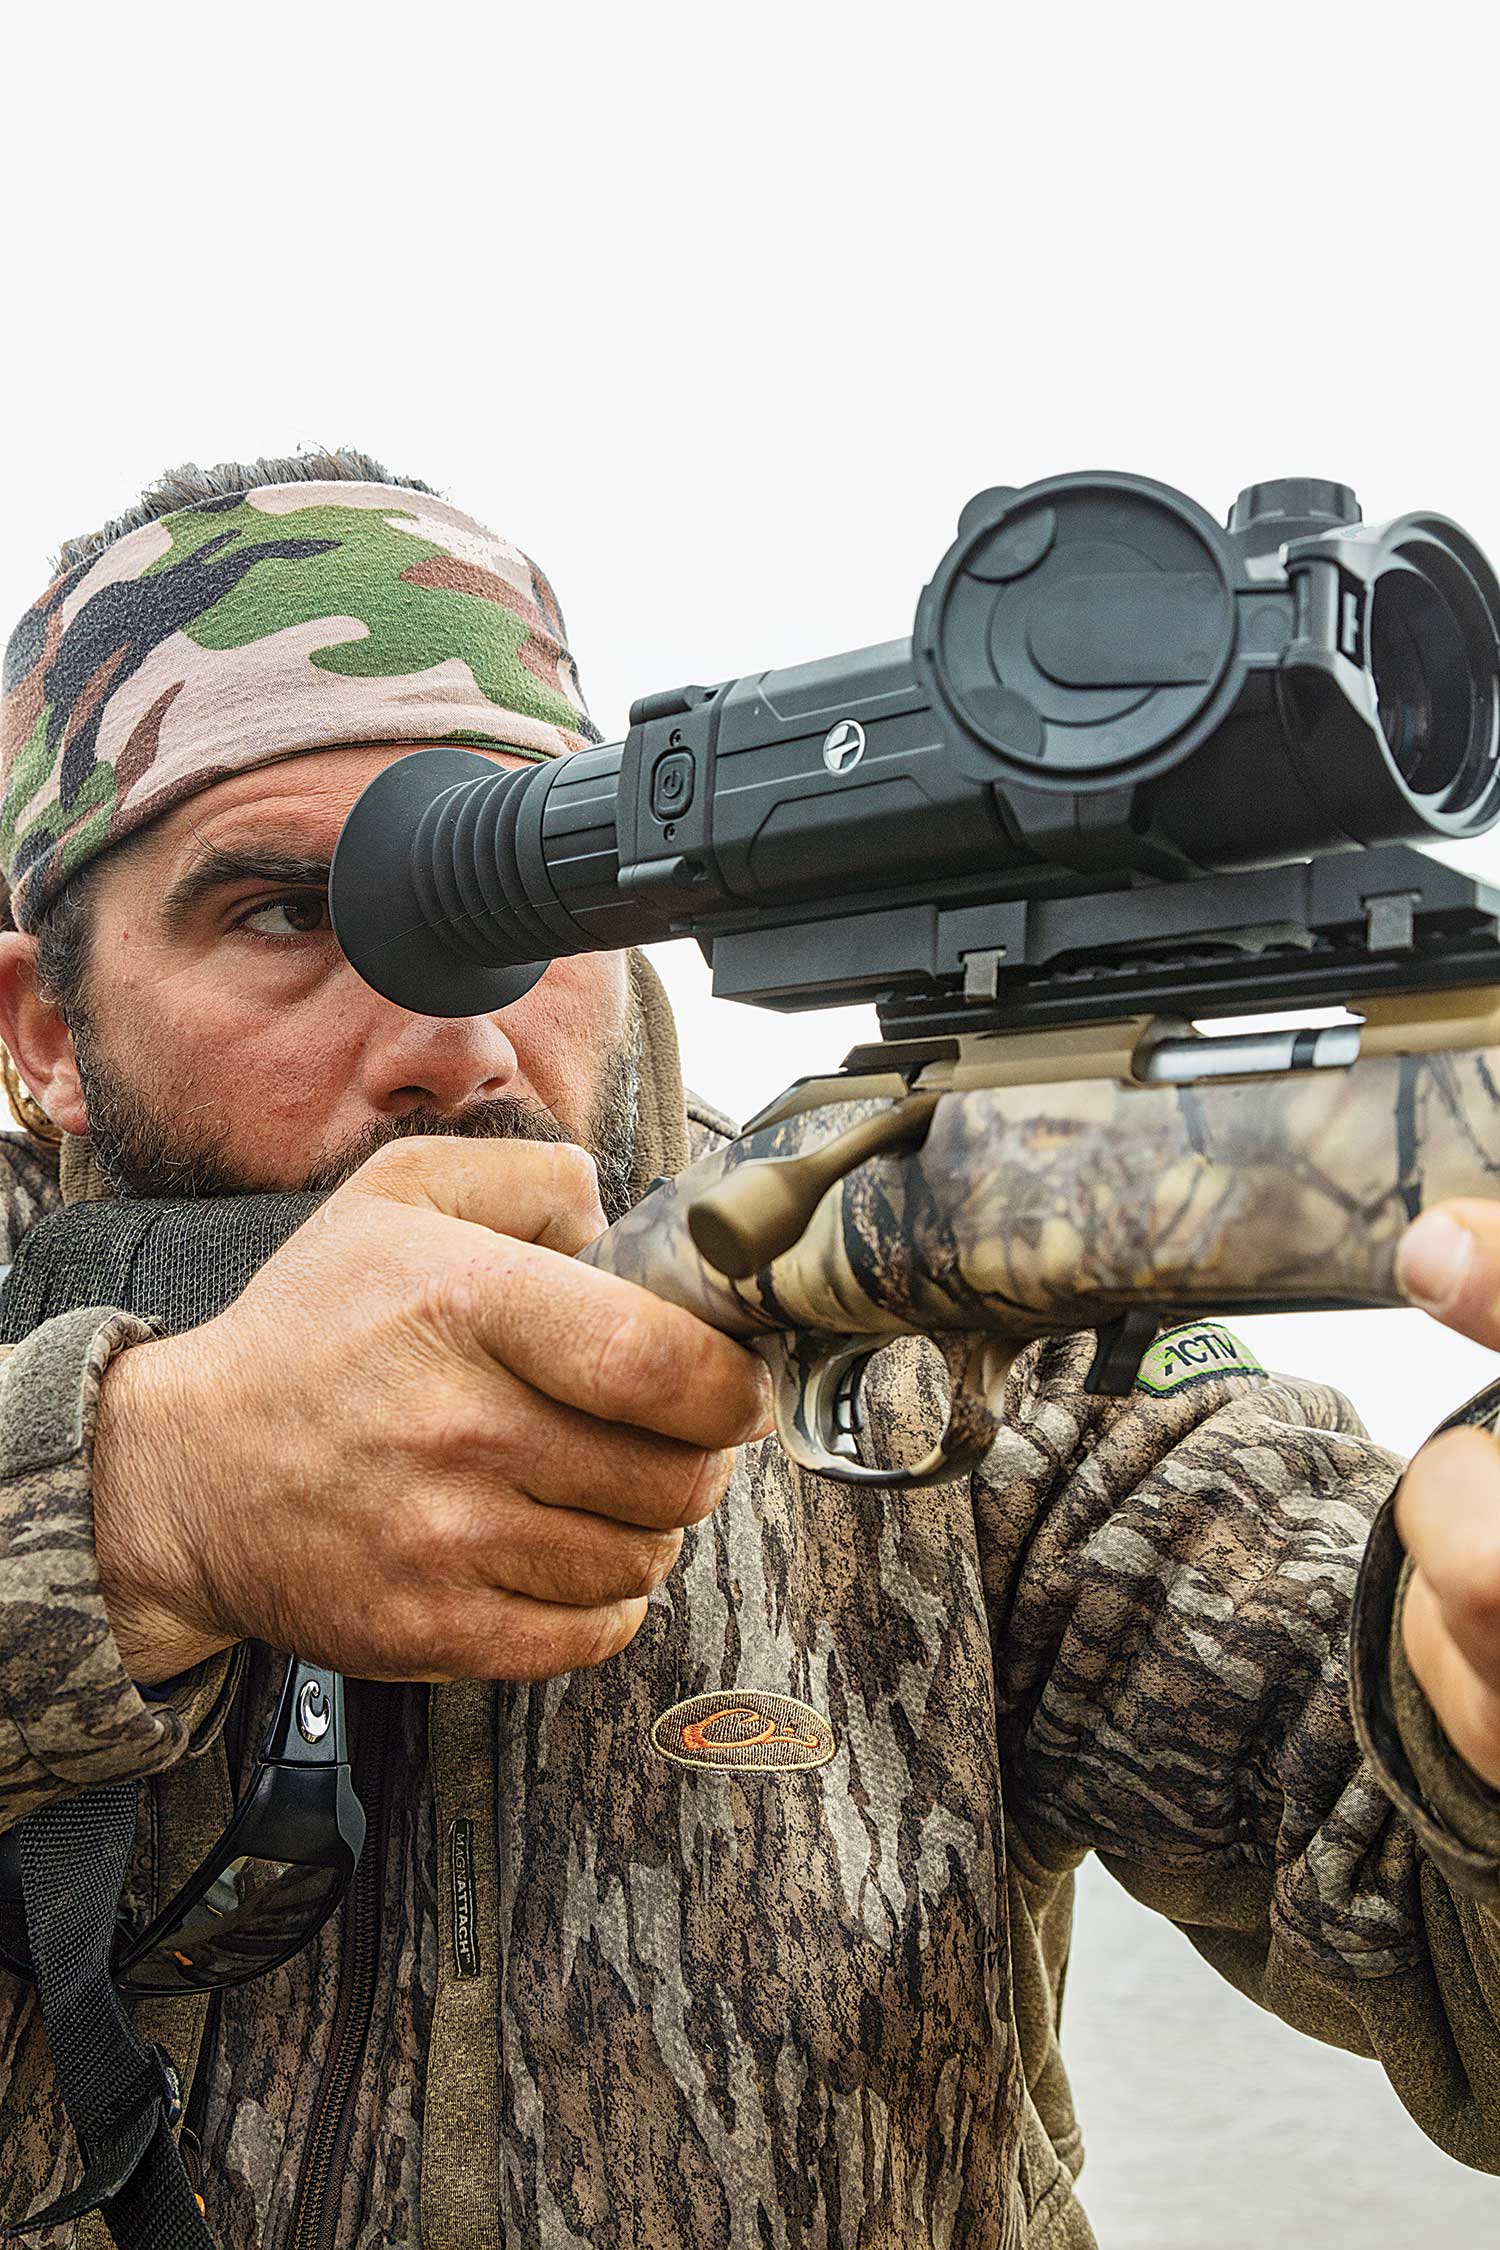 hunter peers through thermal scope atop rifle